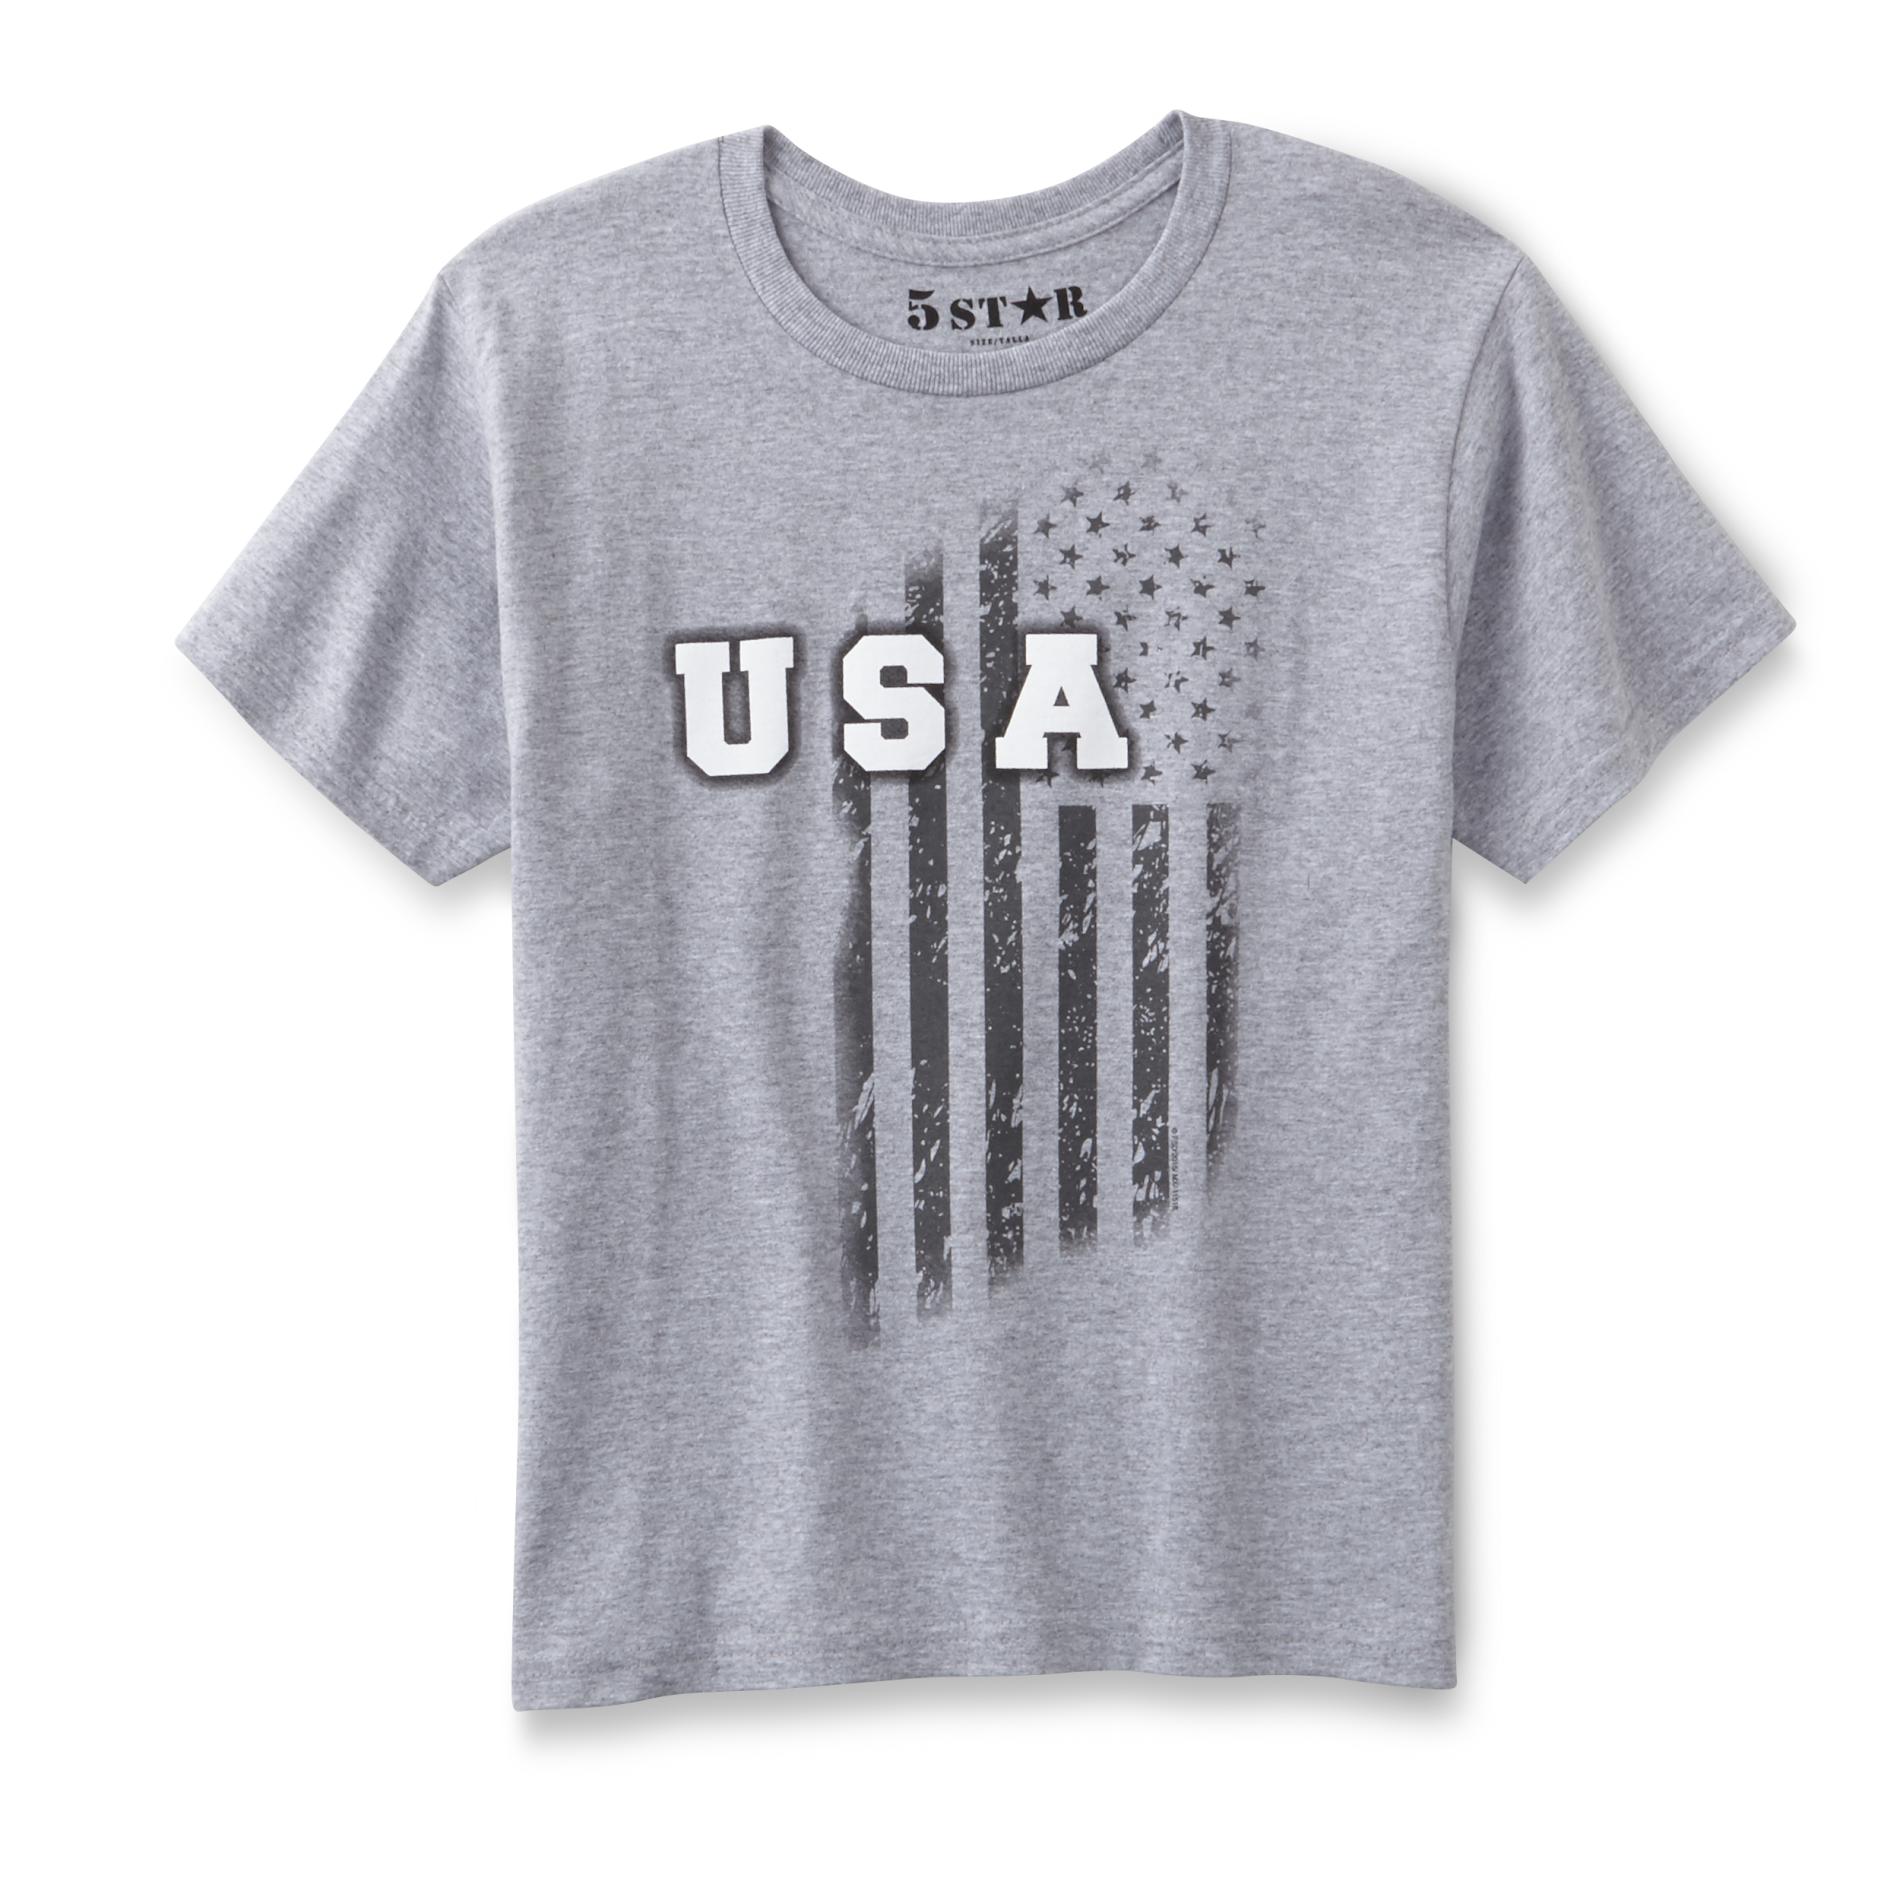 5Star Boy's Graphic T-Shirt - USA Flag